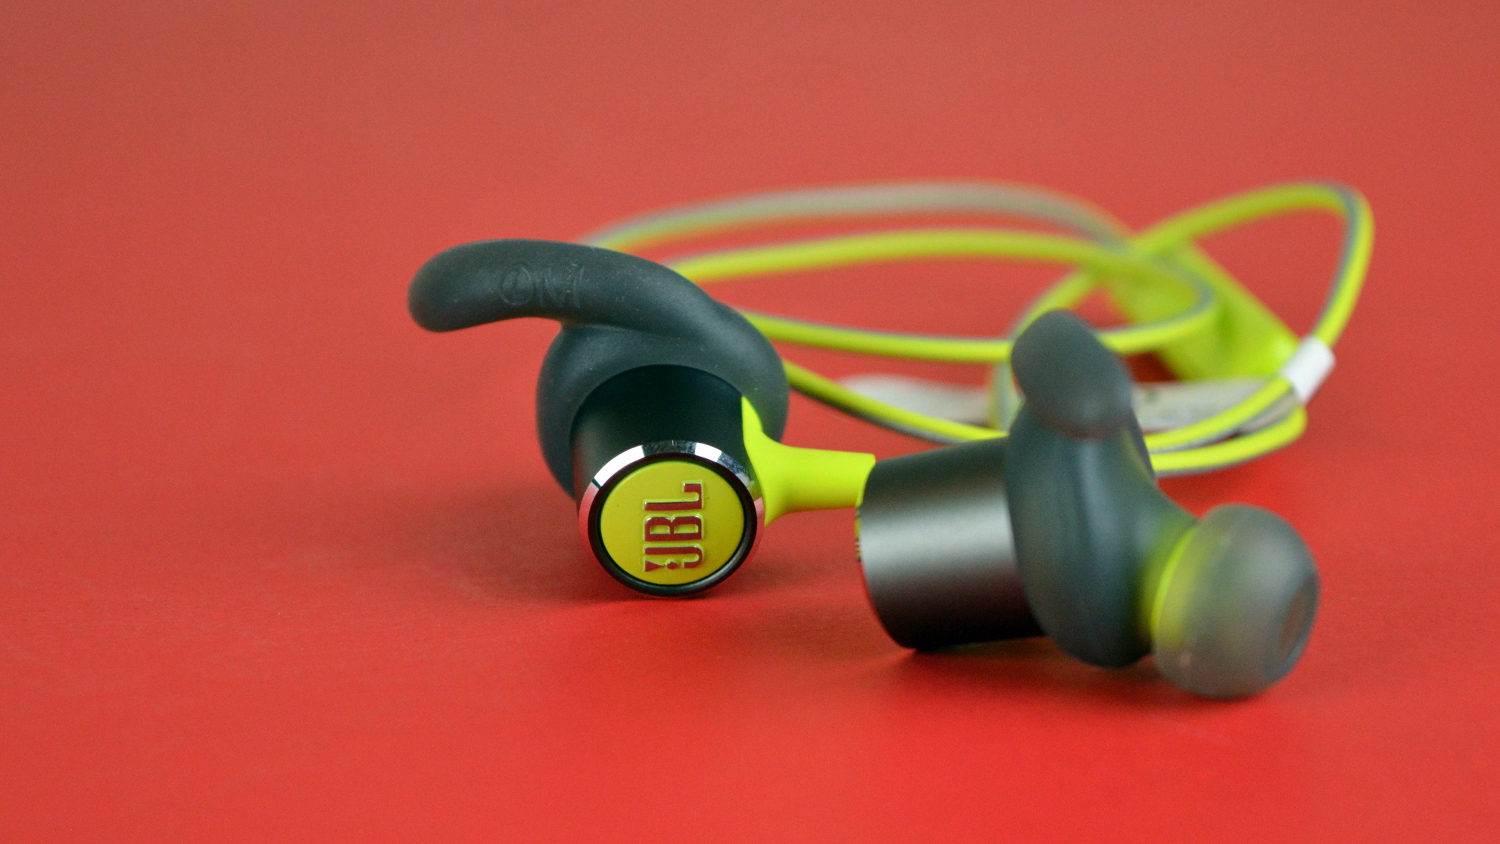 Samuel fordom Tåre JBL Reflect Mini 2 in-ear sports headphones review - Headphone Review